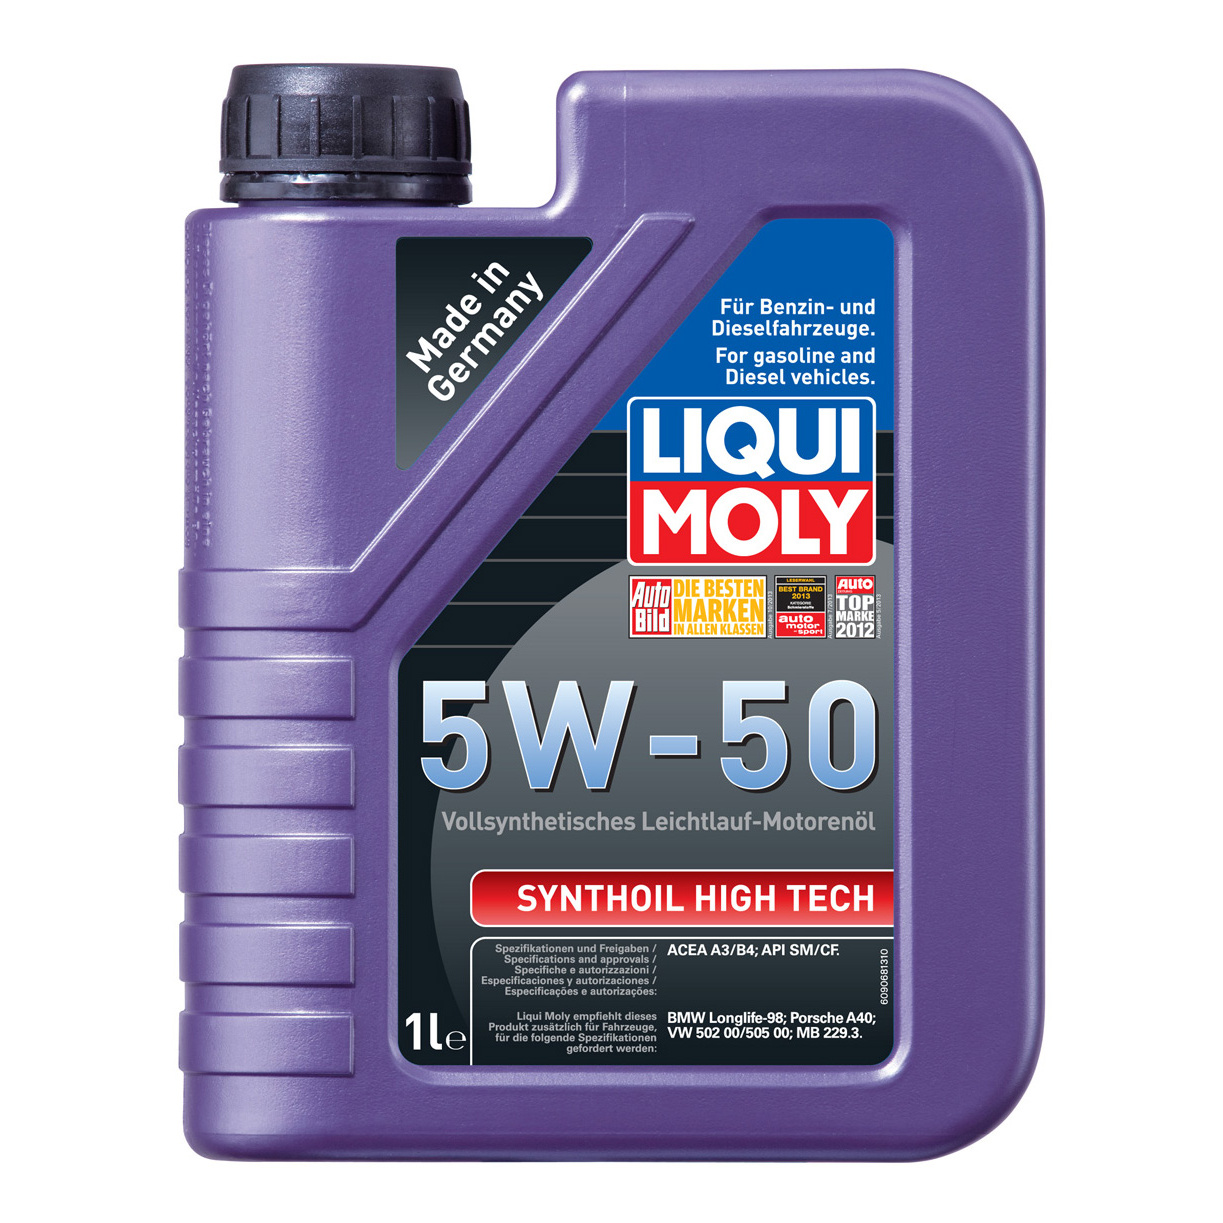 Liqui moly Моторное масло Синтетическое High Tech 5W50 Api Sm,Cf, Acea A3/B4 1л